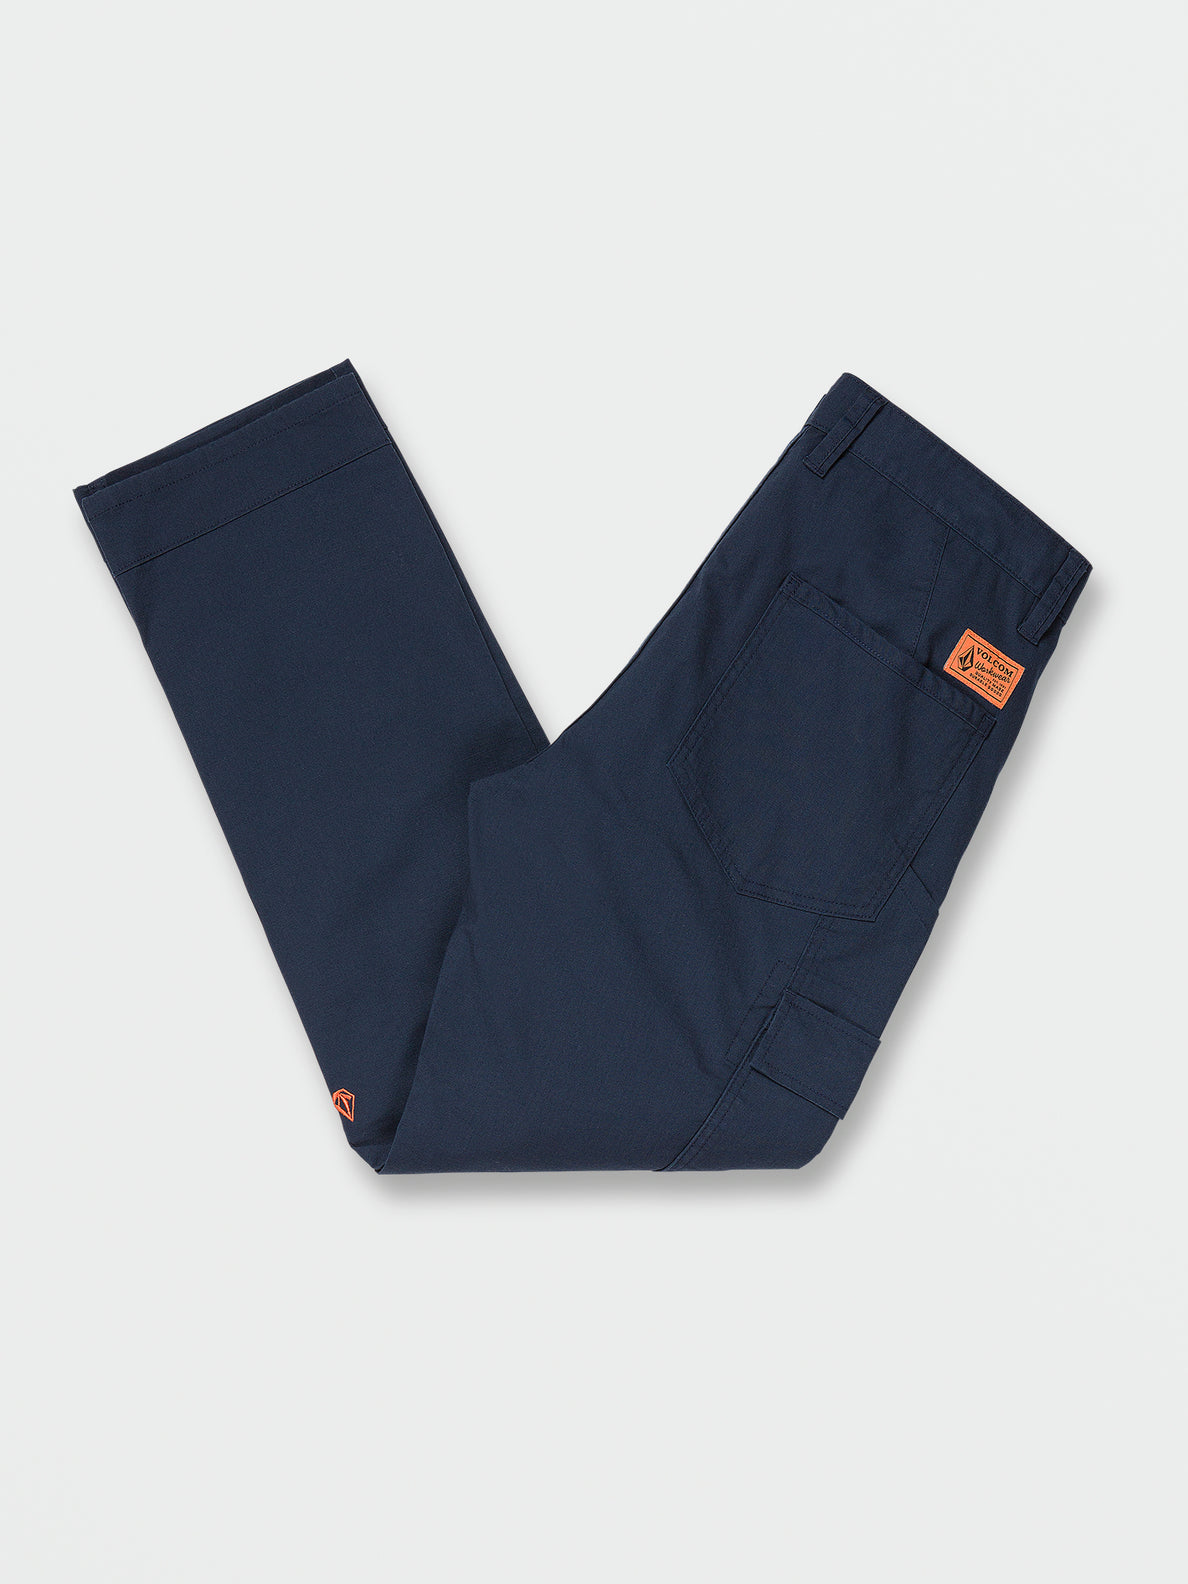 Lowes Ladies Stretch Navy Multi Pocket Work Pants - Lowes Menswear